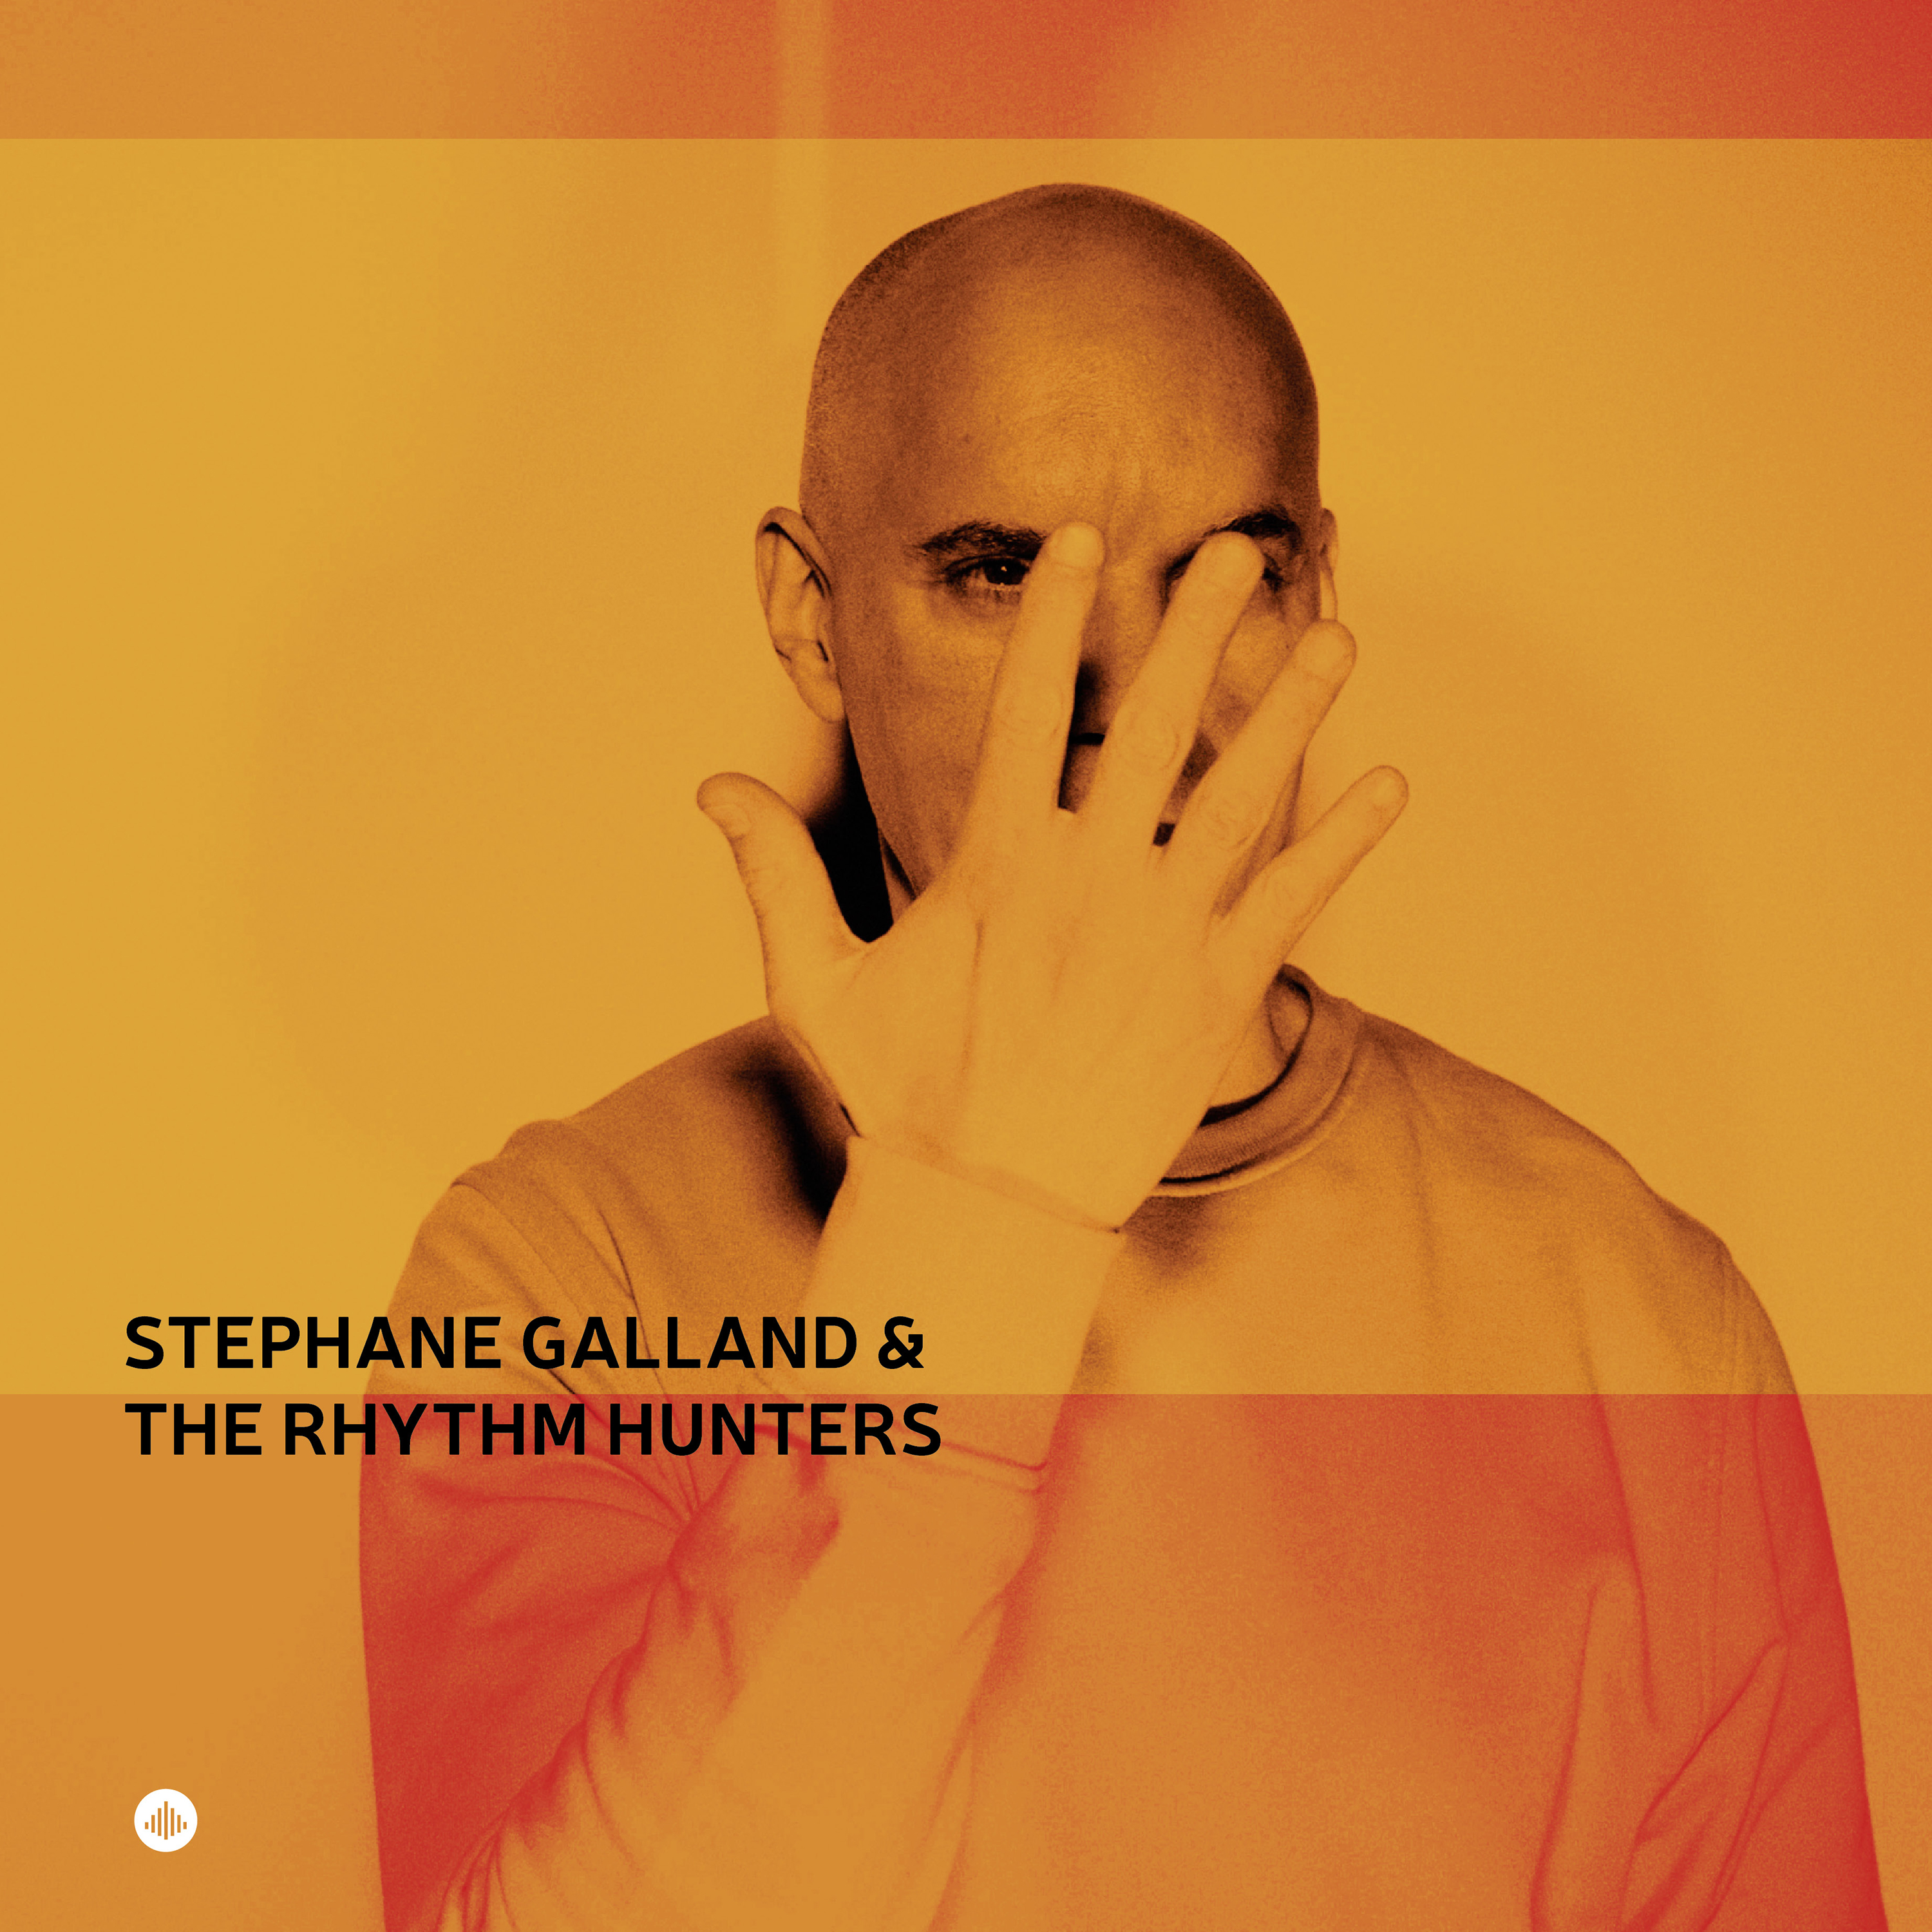 STÉPHANE GALLAND - Stephane Galland & the Rhythm Hunters cover 